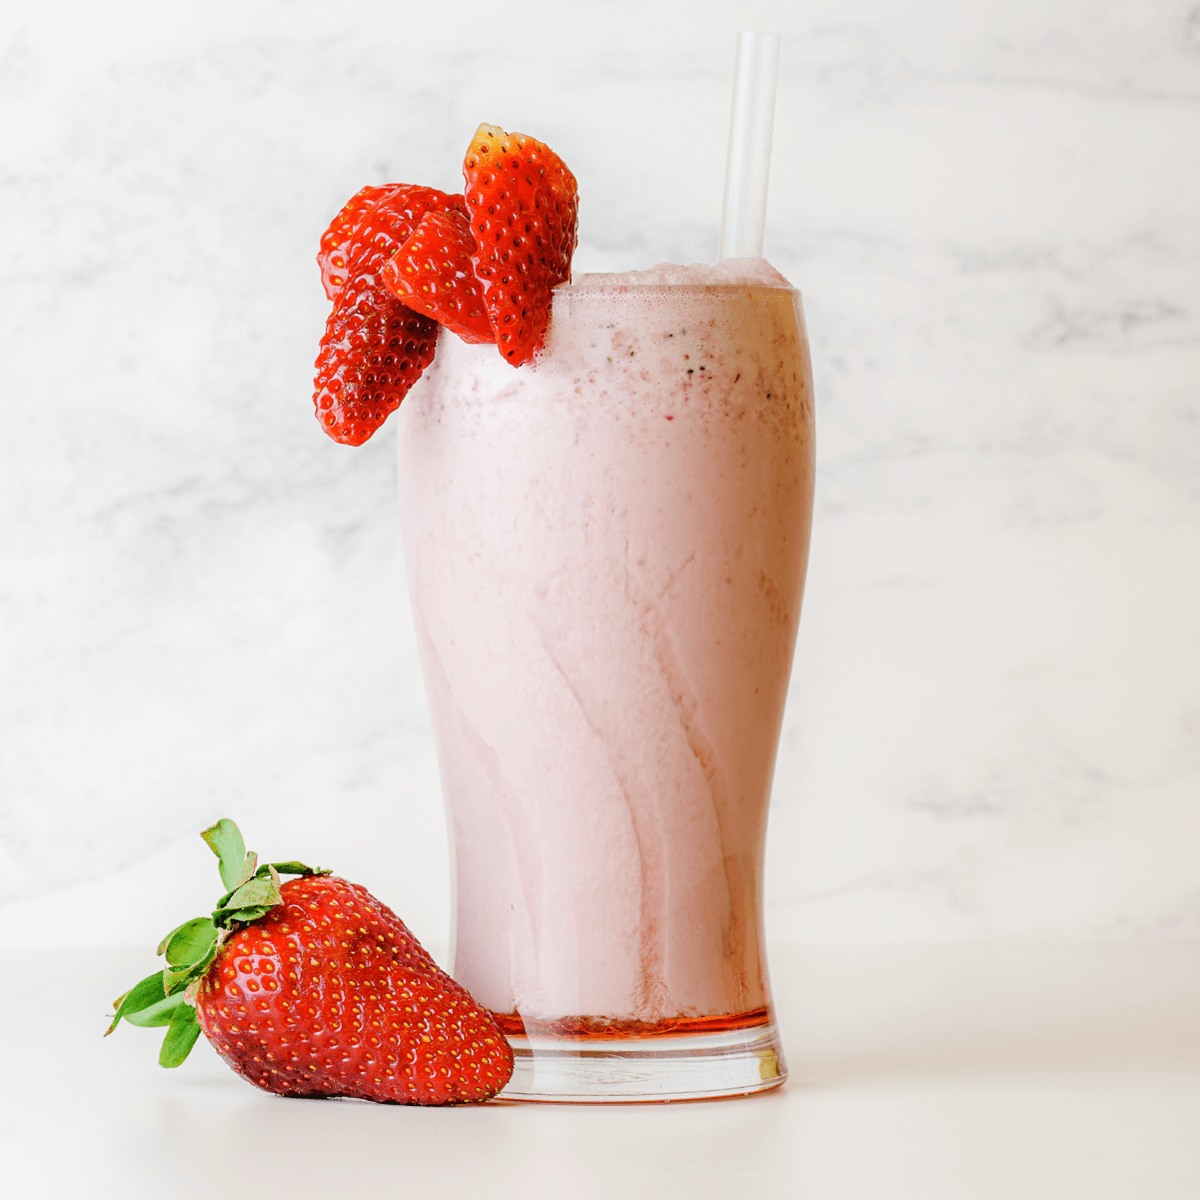 Glass with strawberry smoothie made with Navitas Goji Powder.